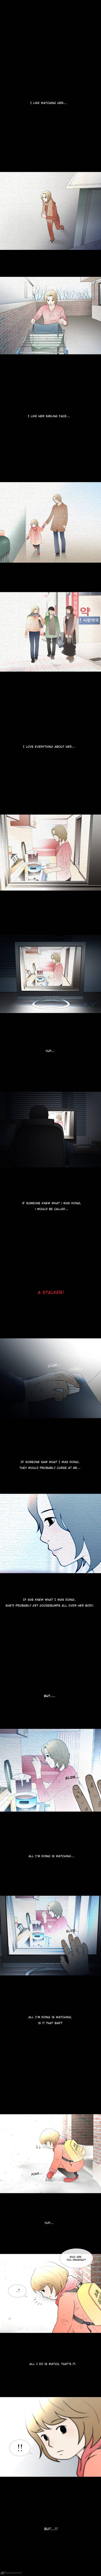 Stalker Chapter 1 Page 1